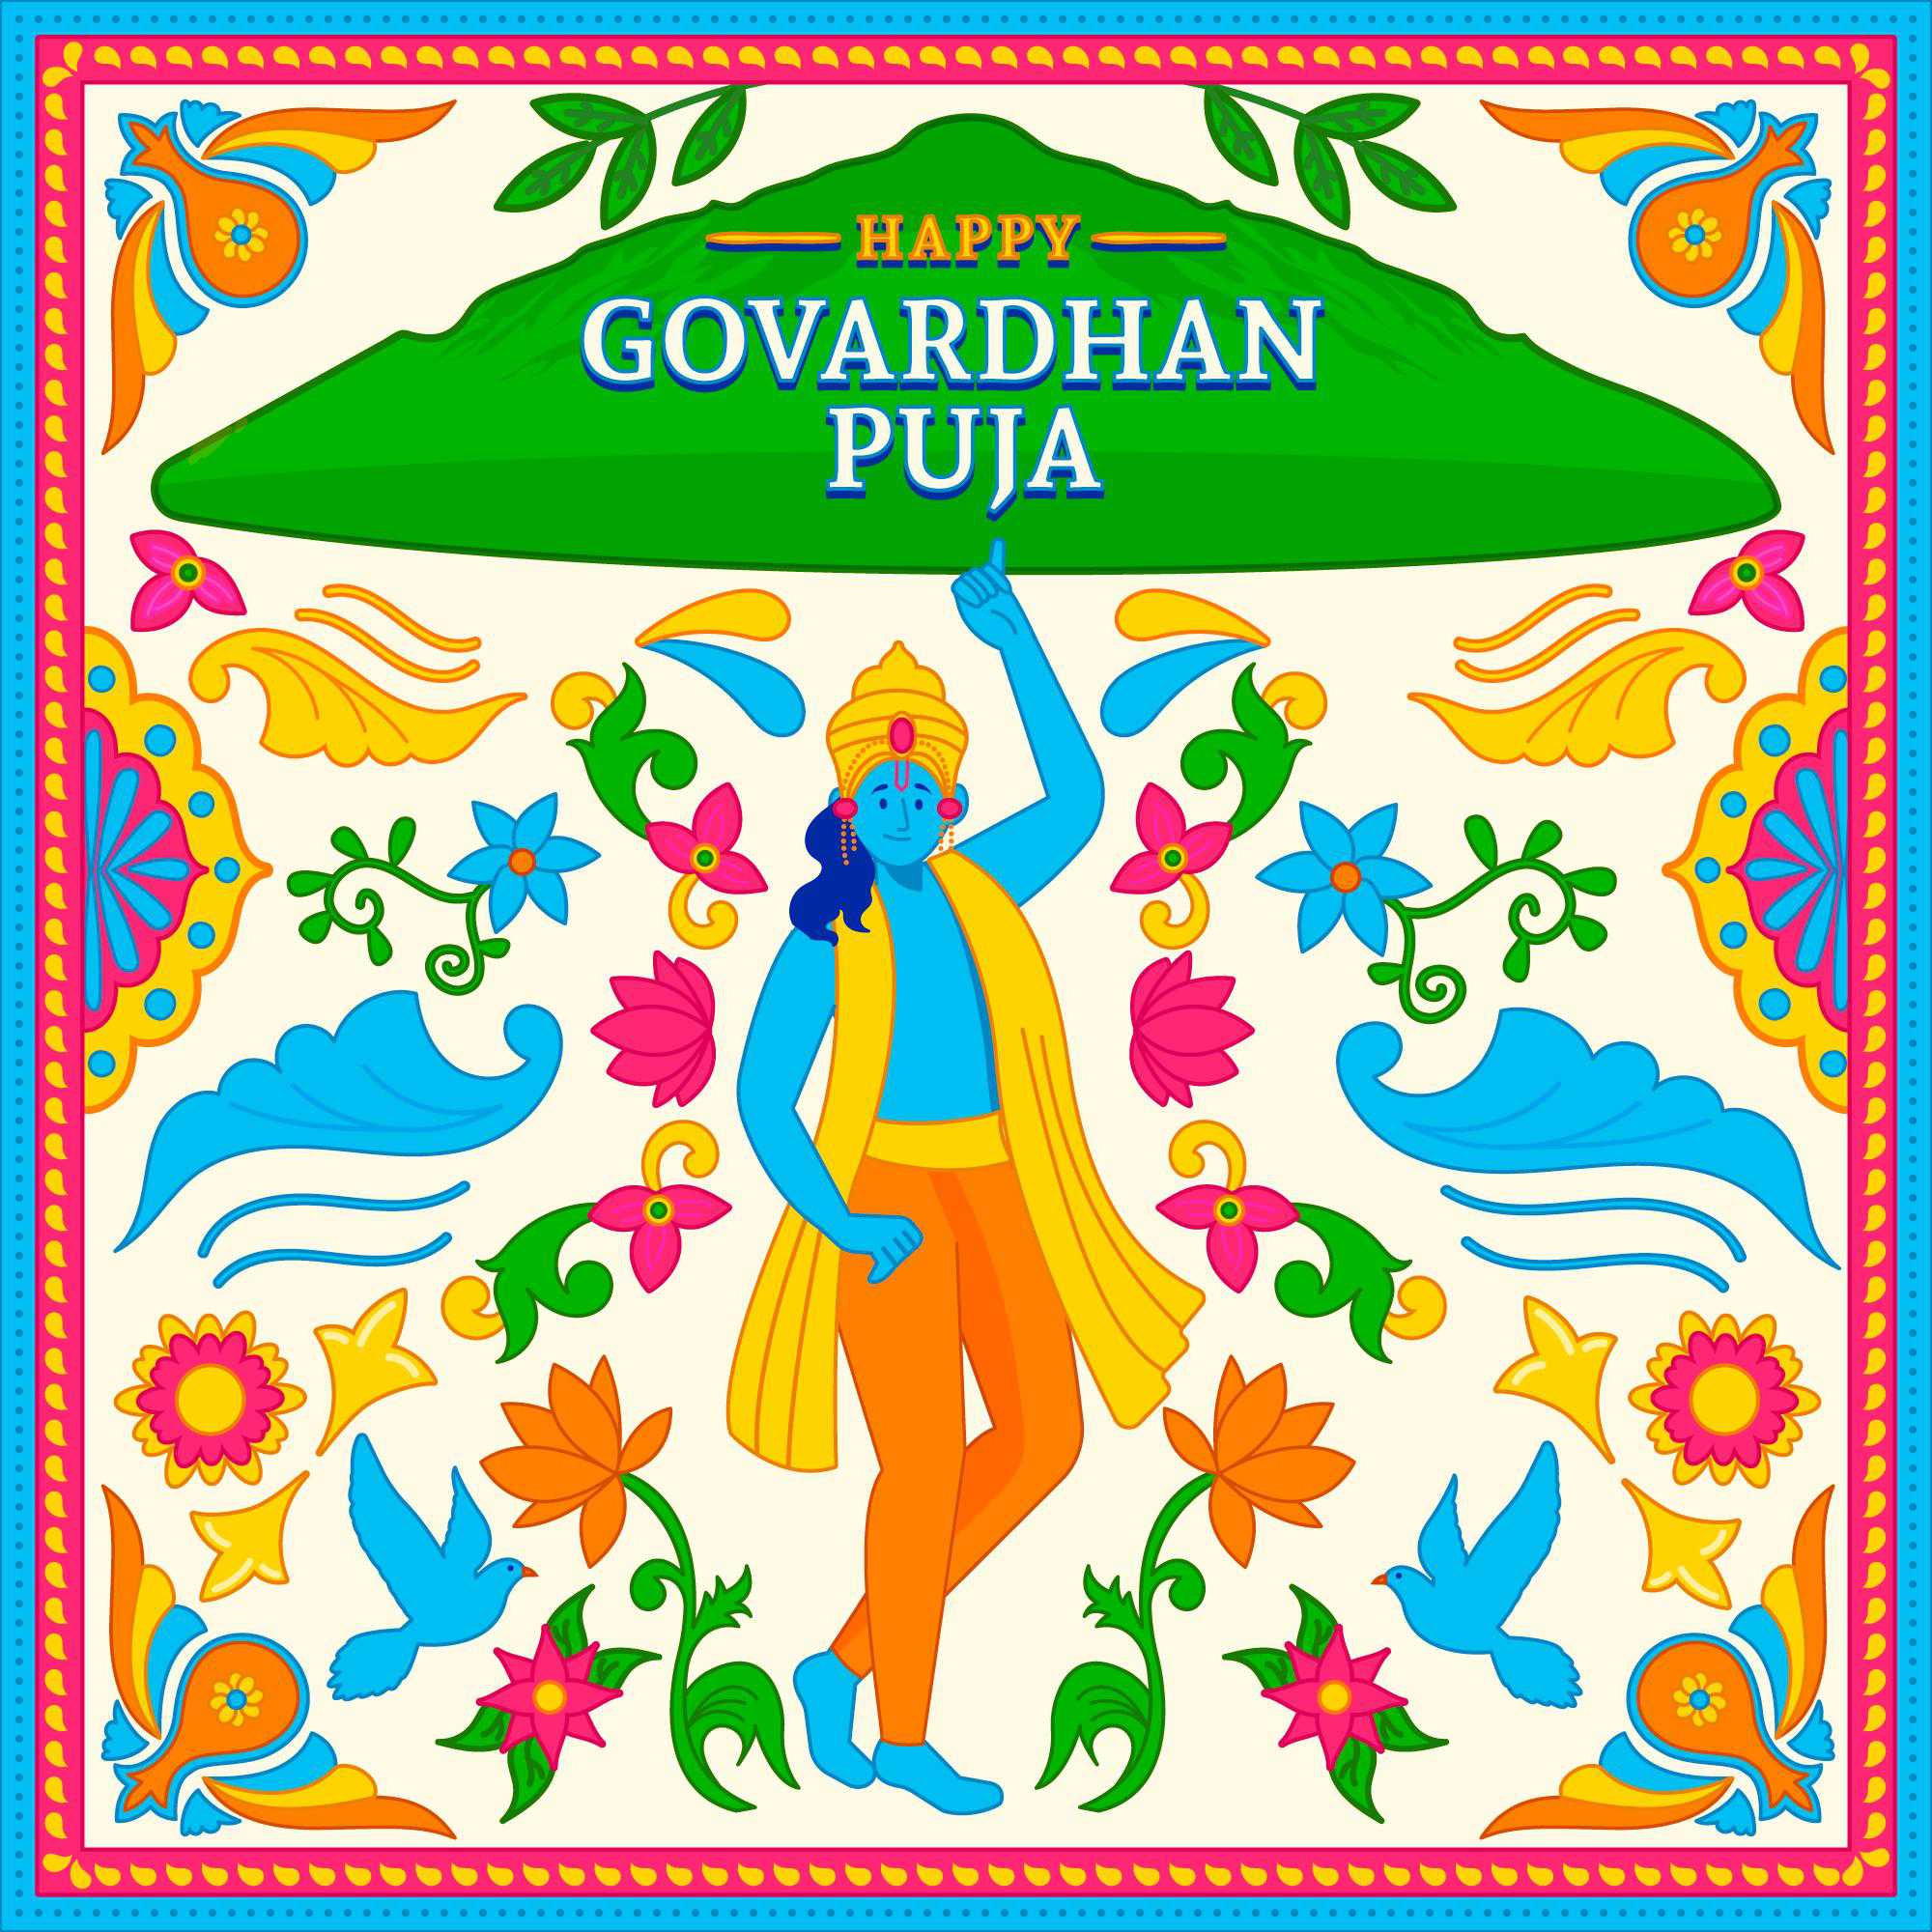 Happy Govardhan puja images